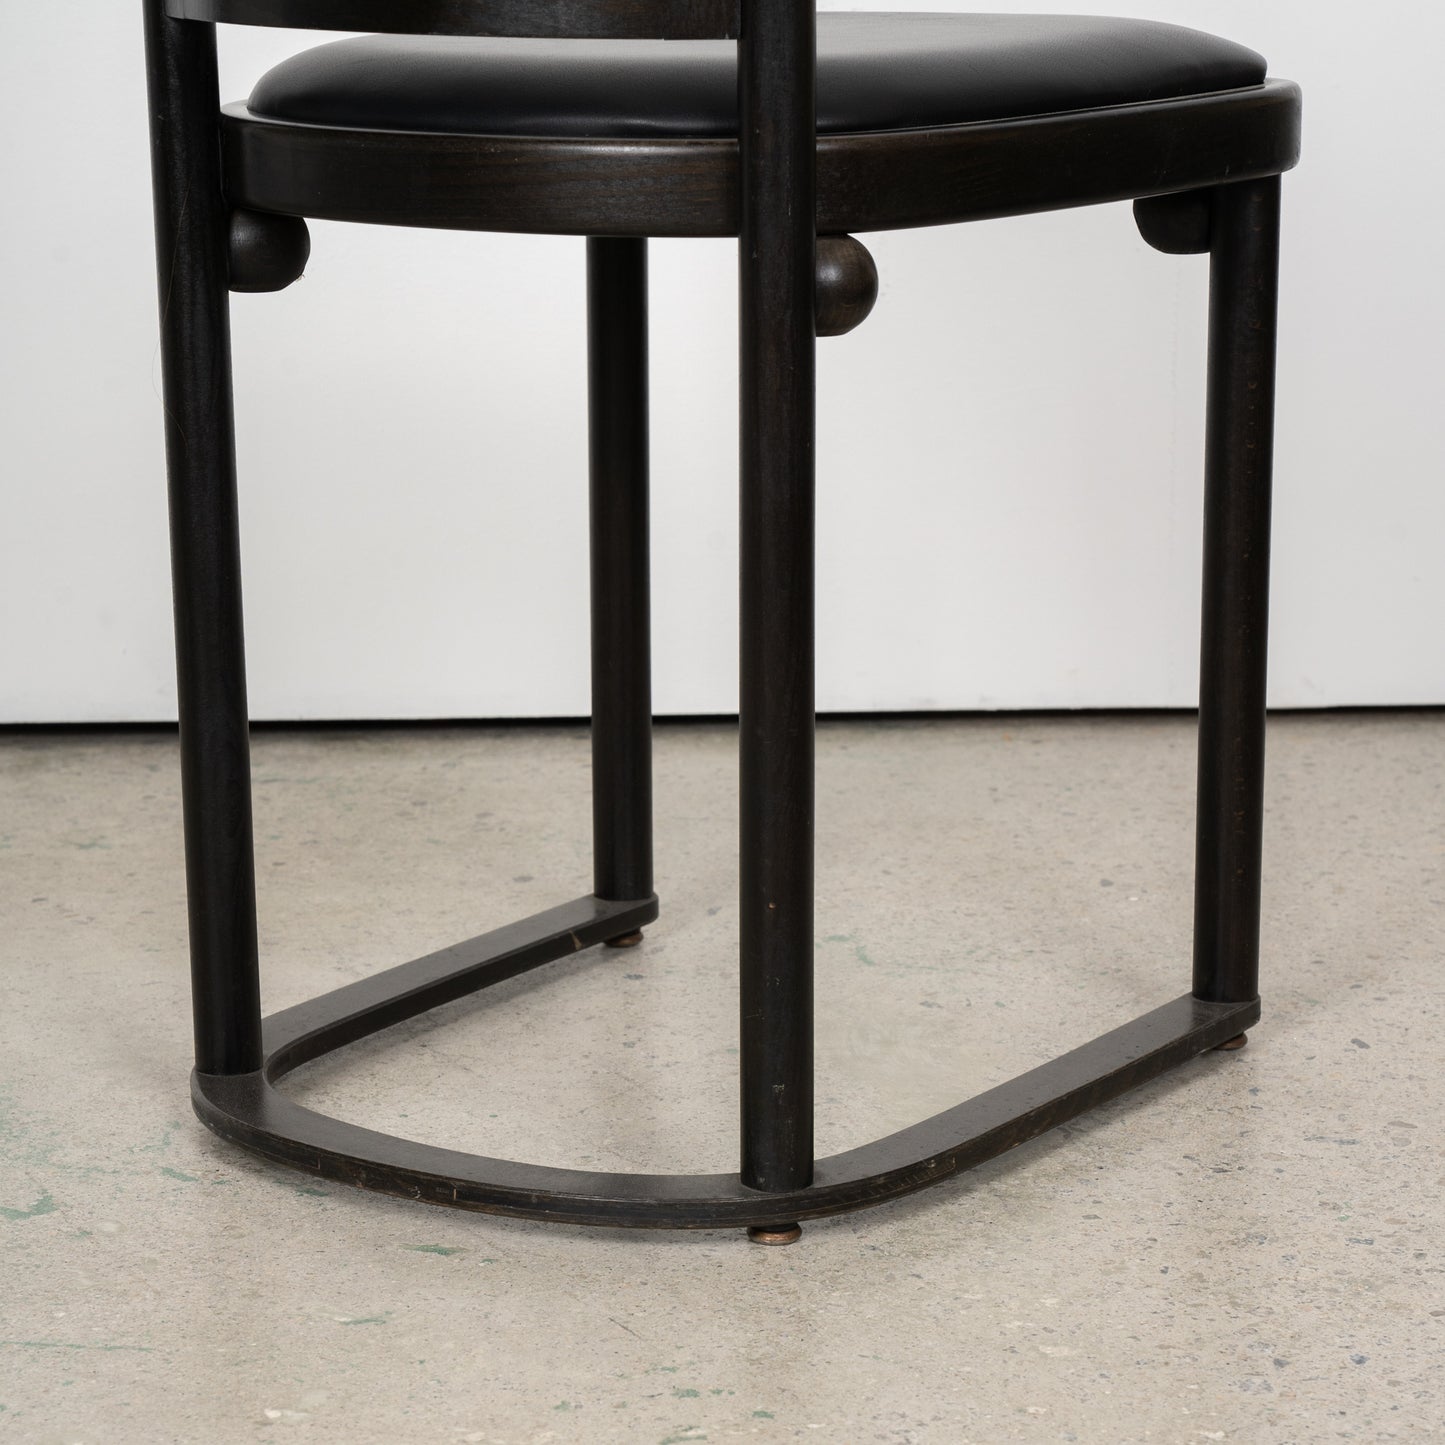 (LOT 12) Fledermaus Dining Chair by Josef Hoffman